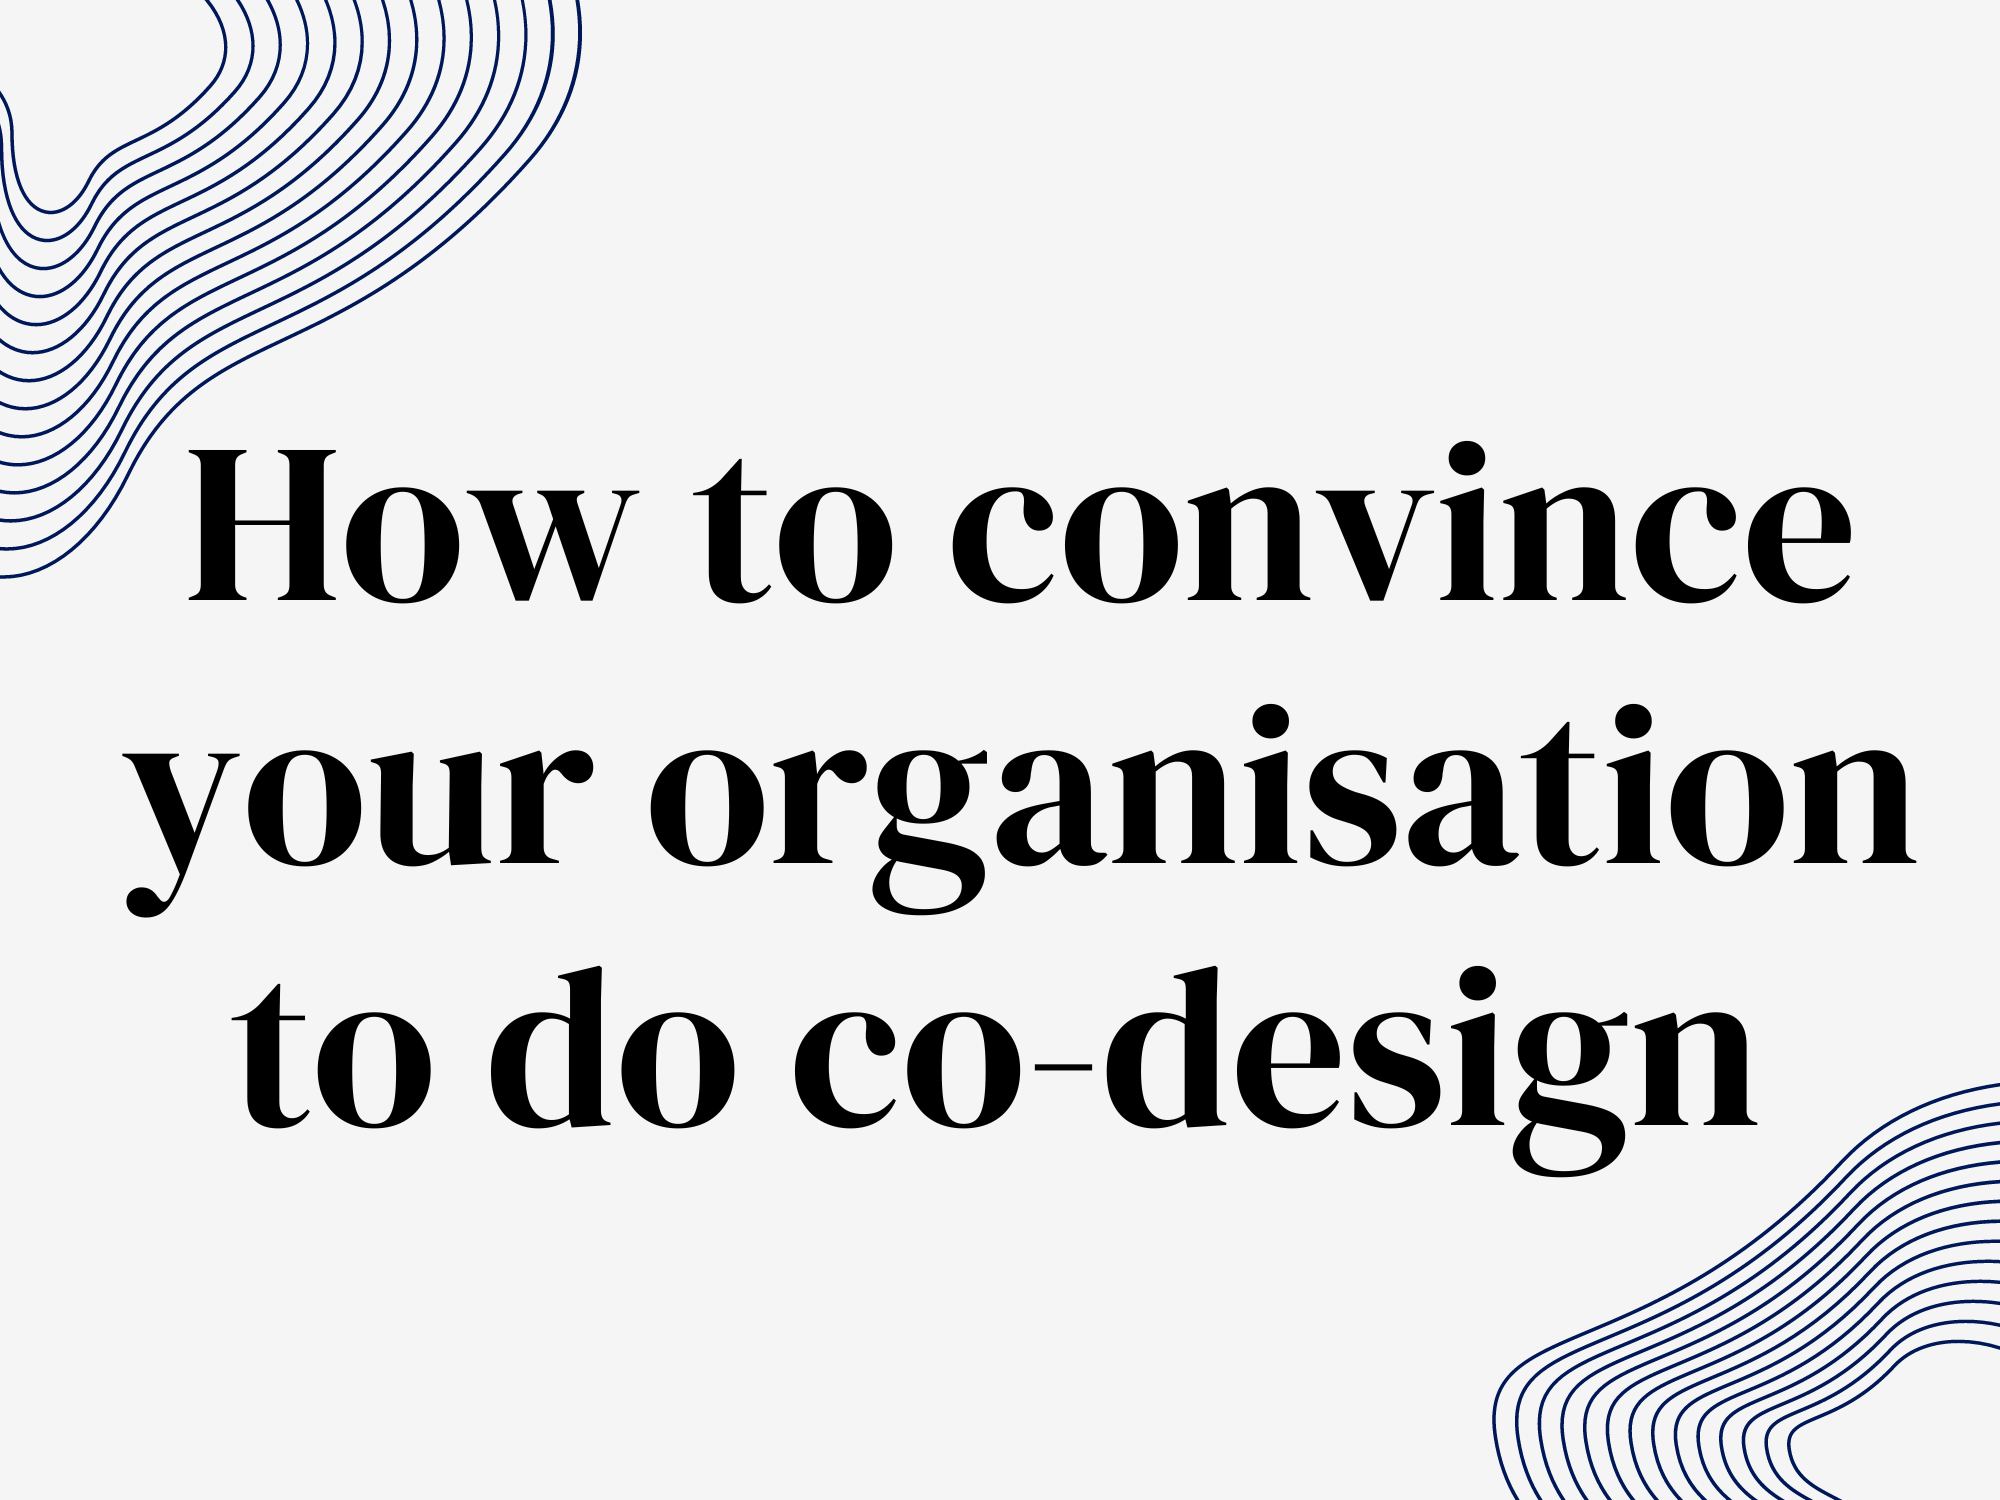 Organisational design: Know your organisation